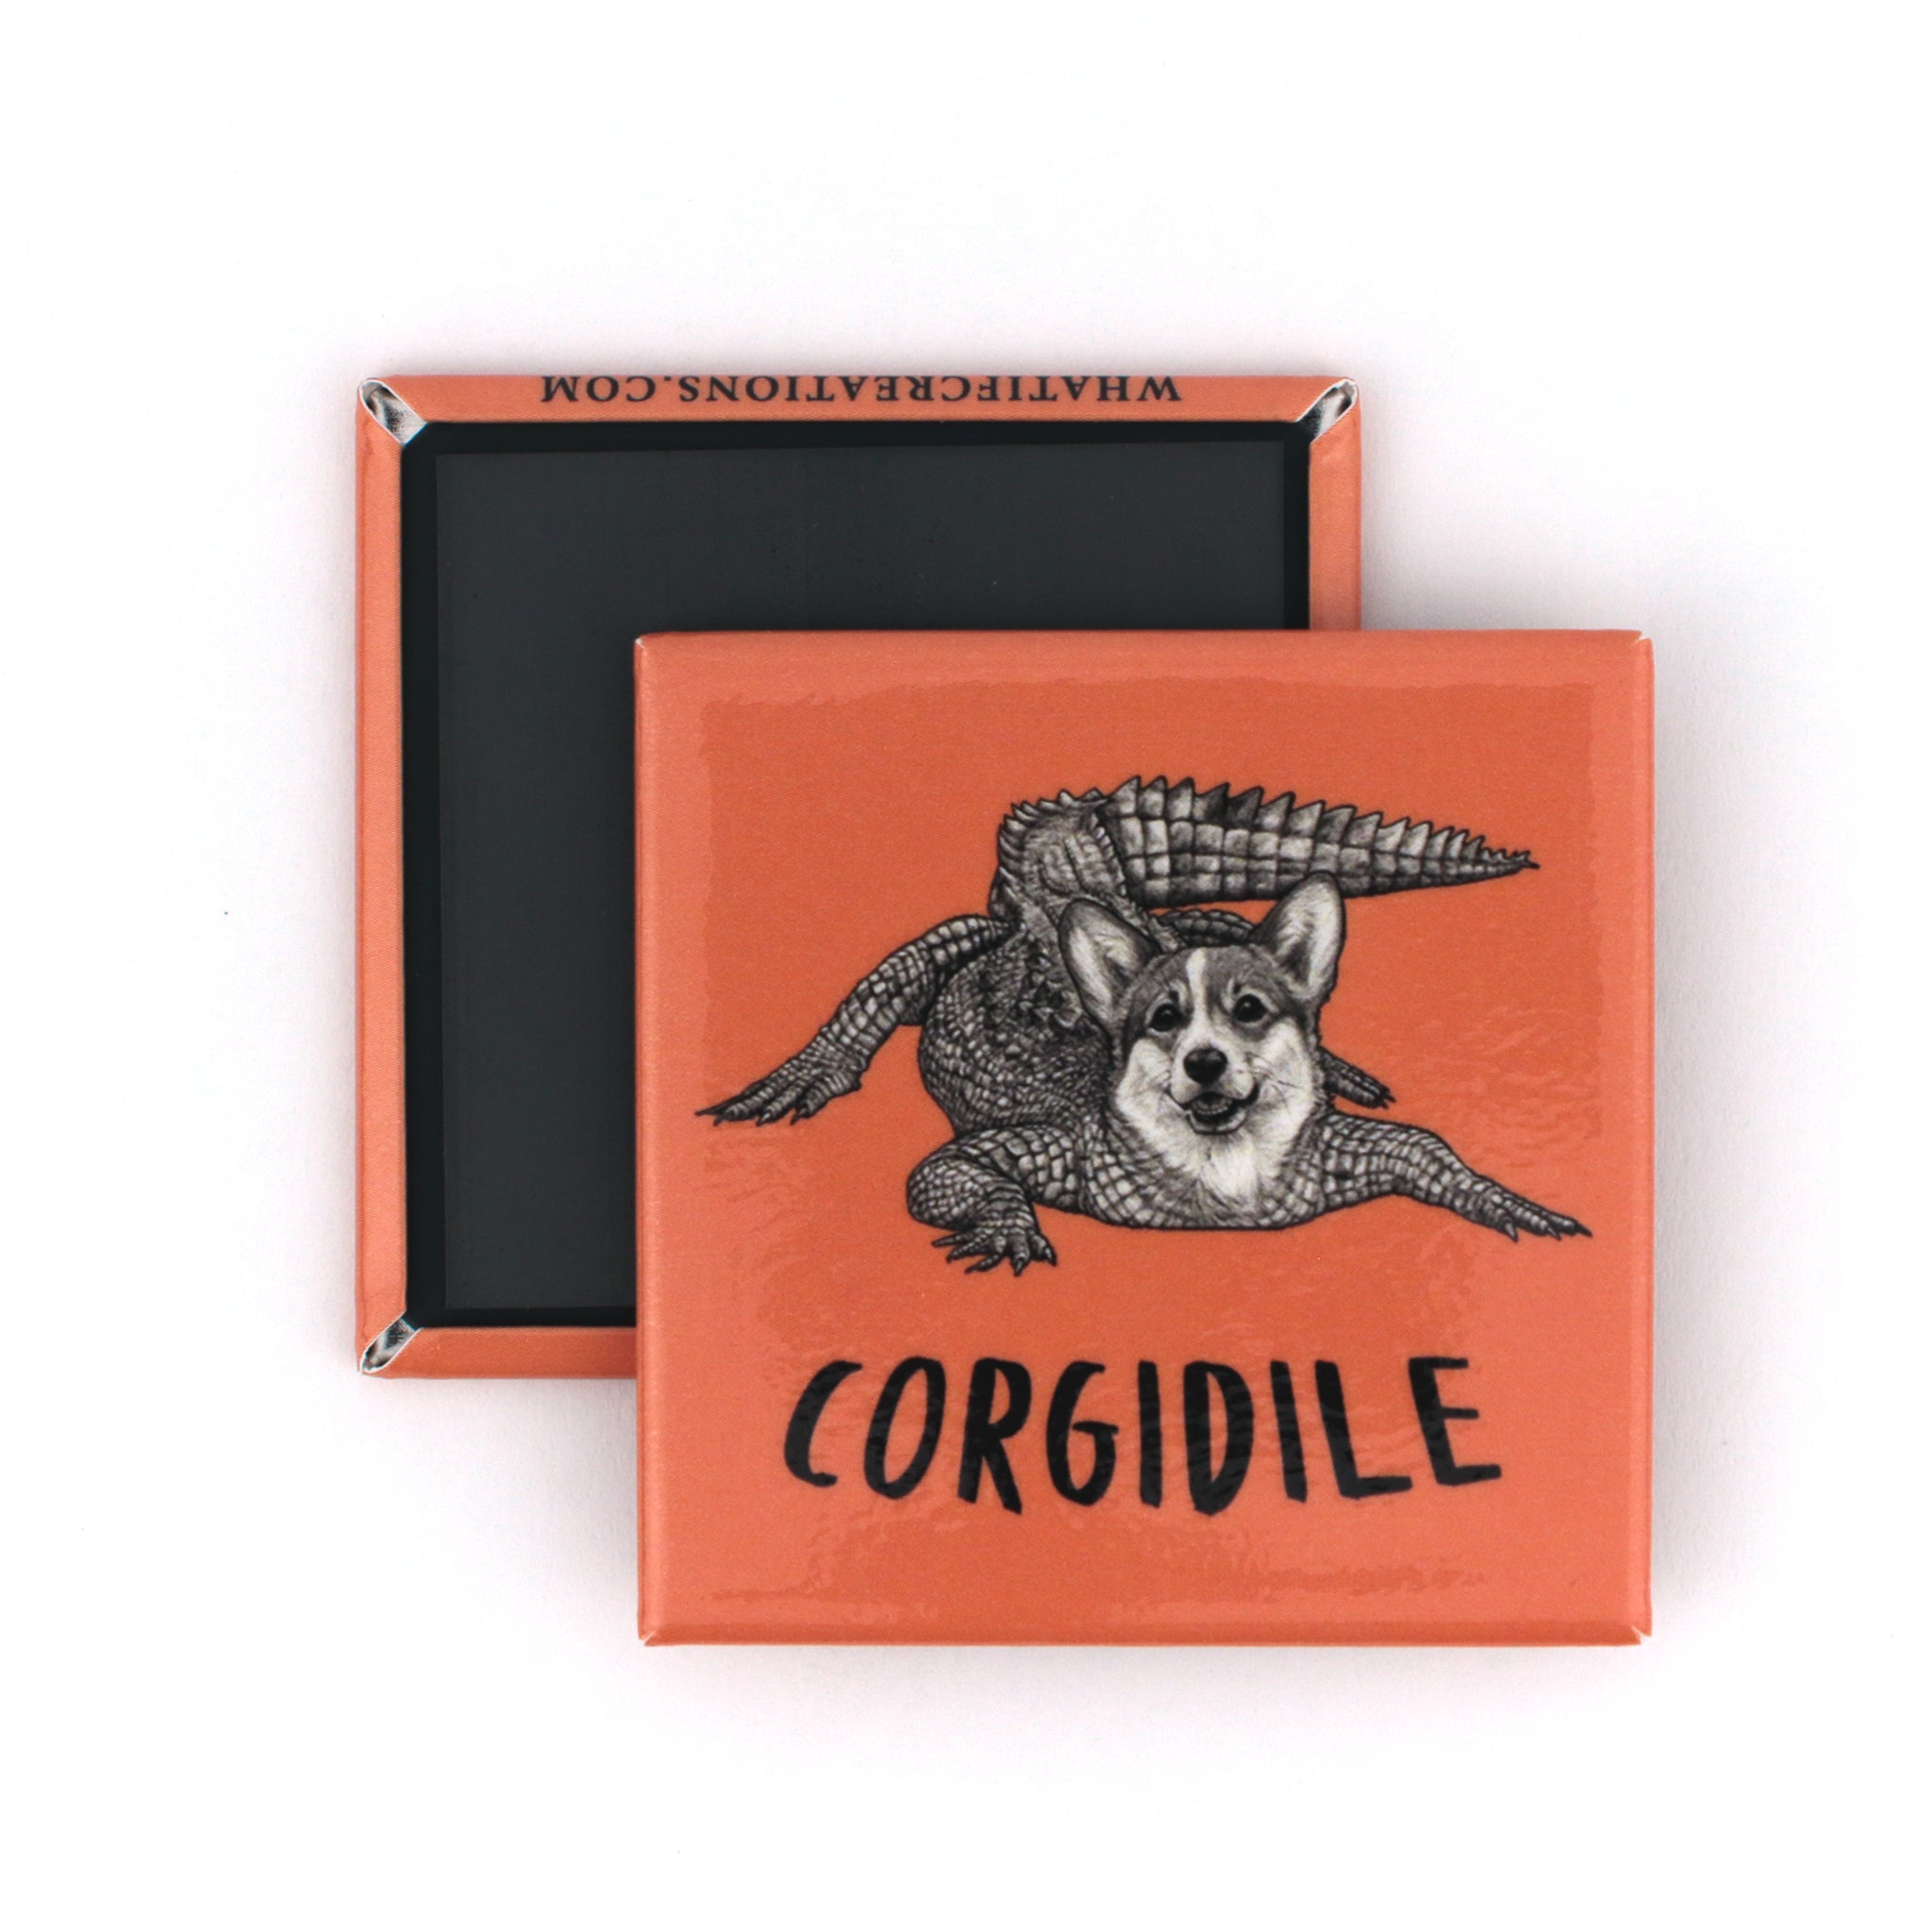 Corgidile | Corgi + Crocodile Hybrid Animal | 2" Fridge Magnet